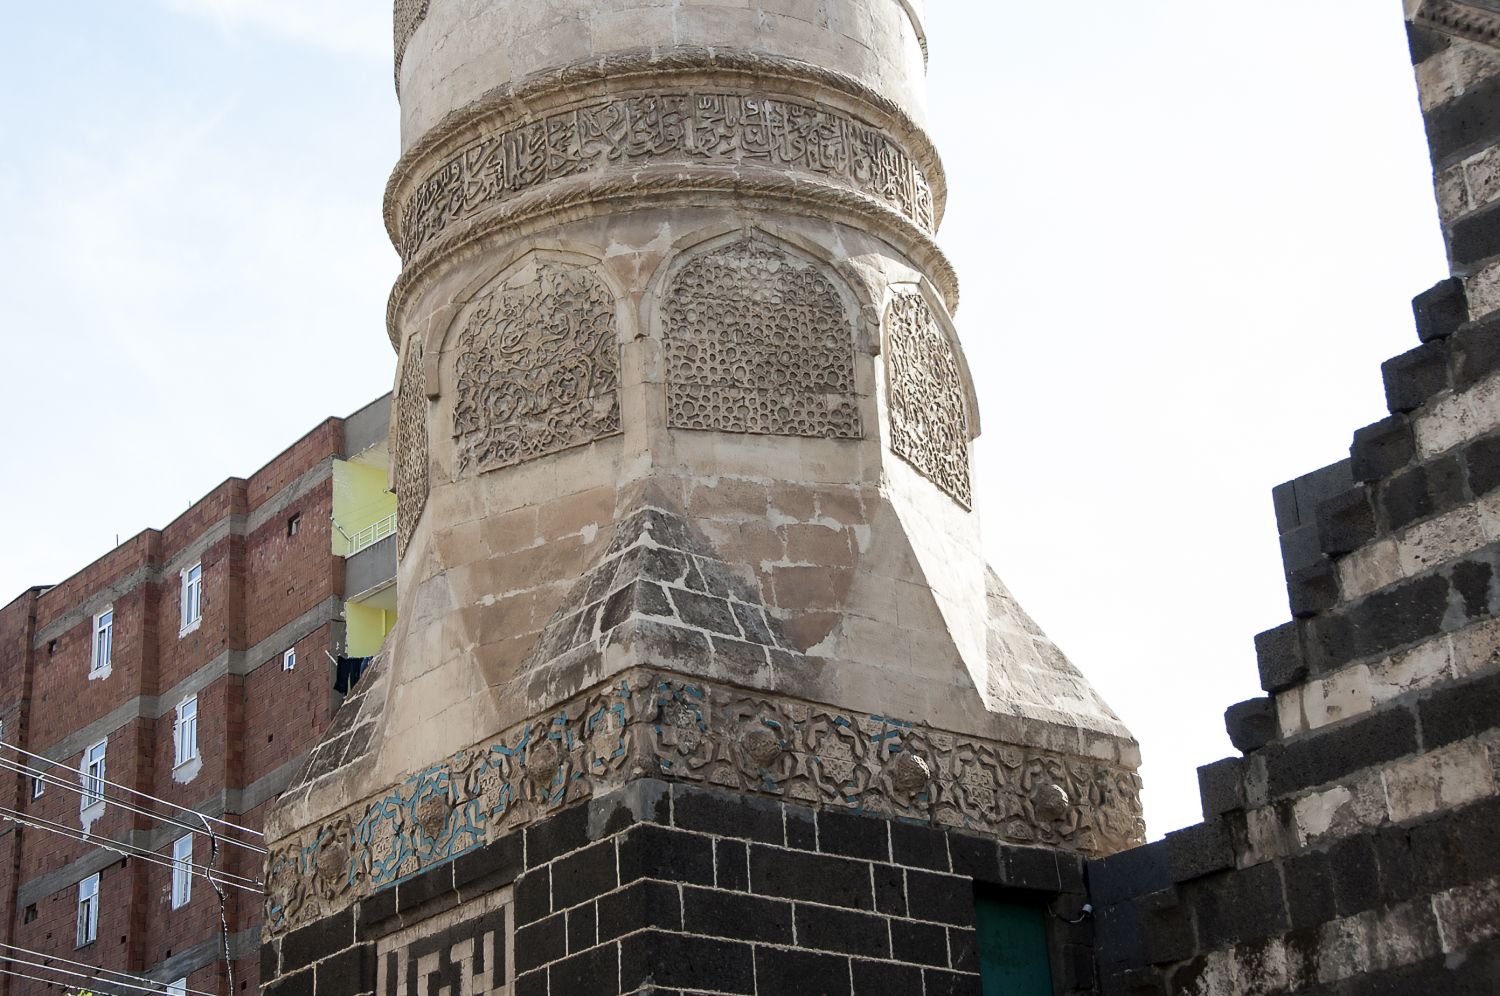 View of base of minaret.